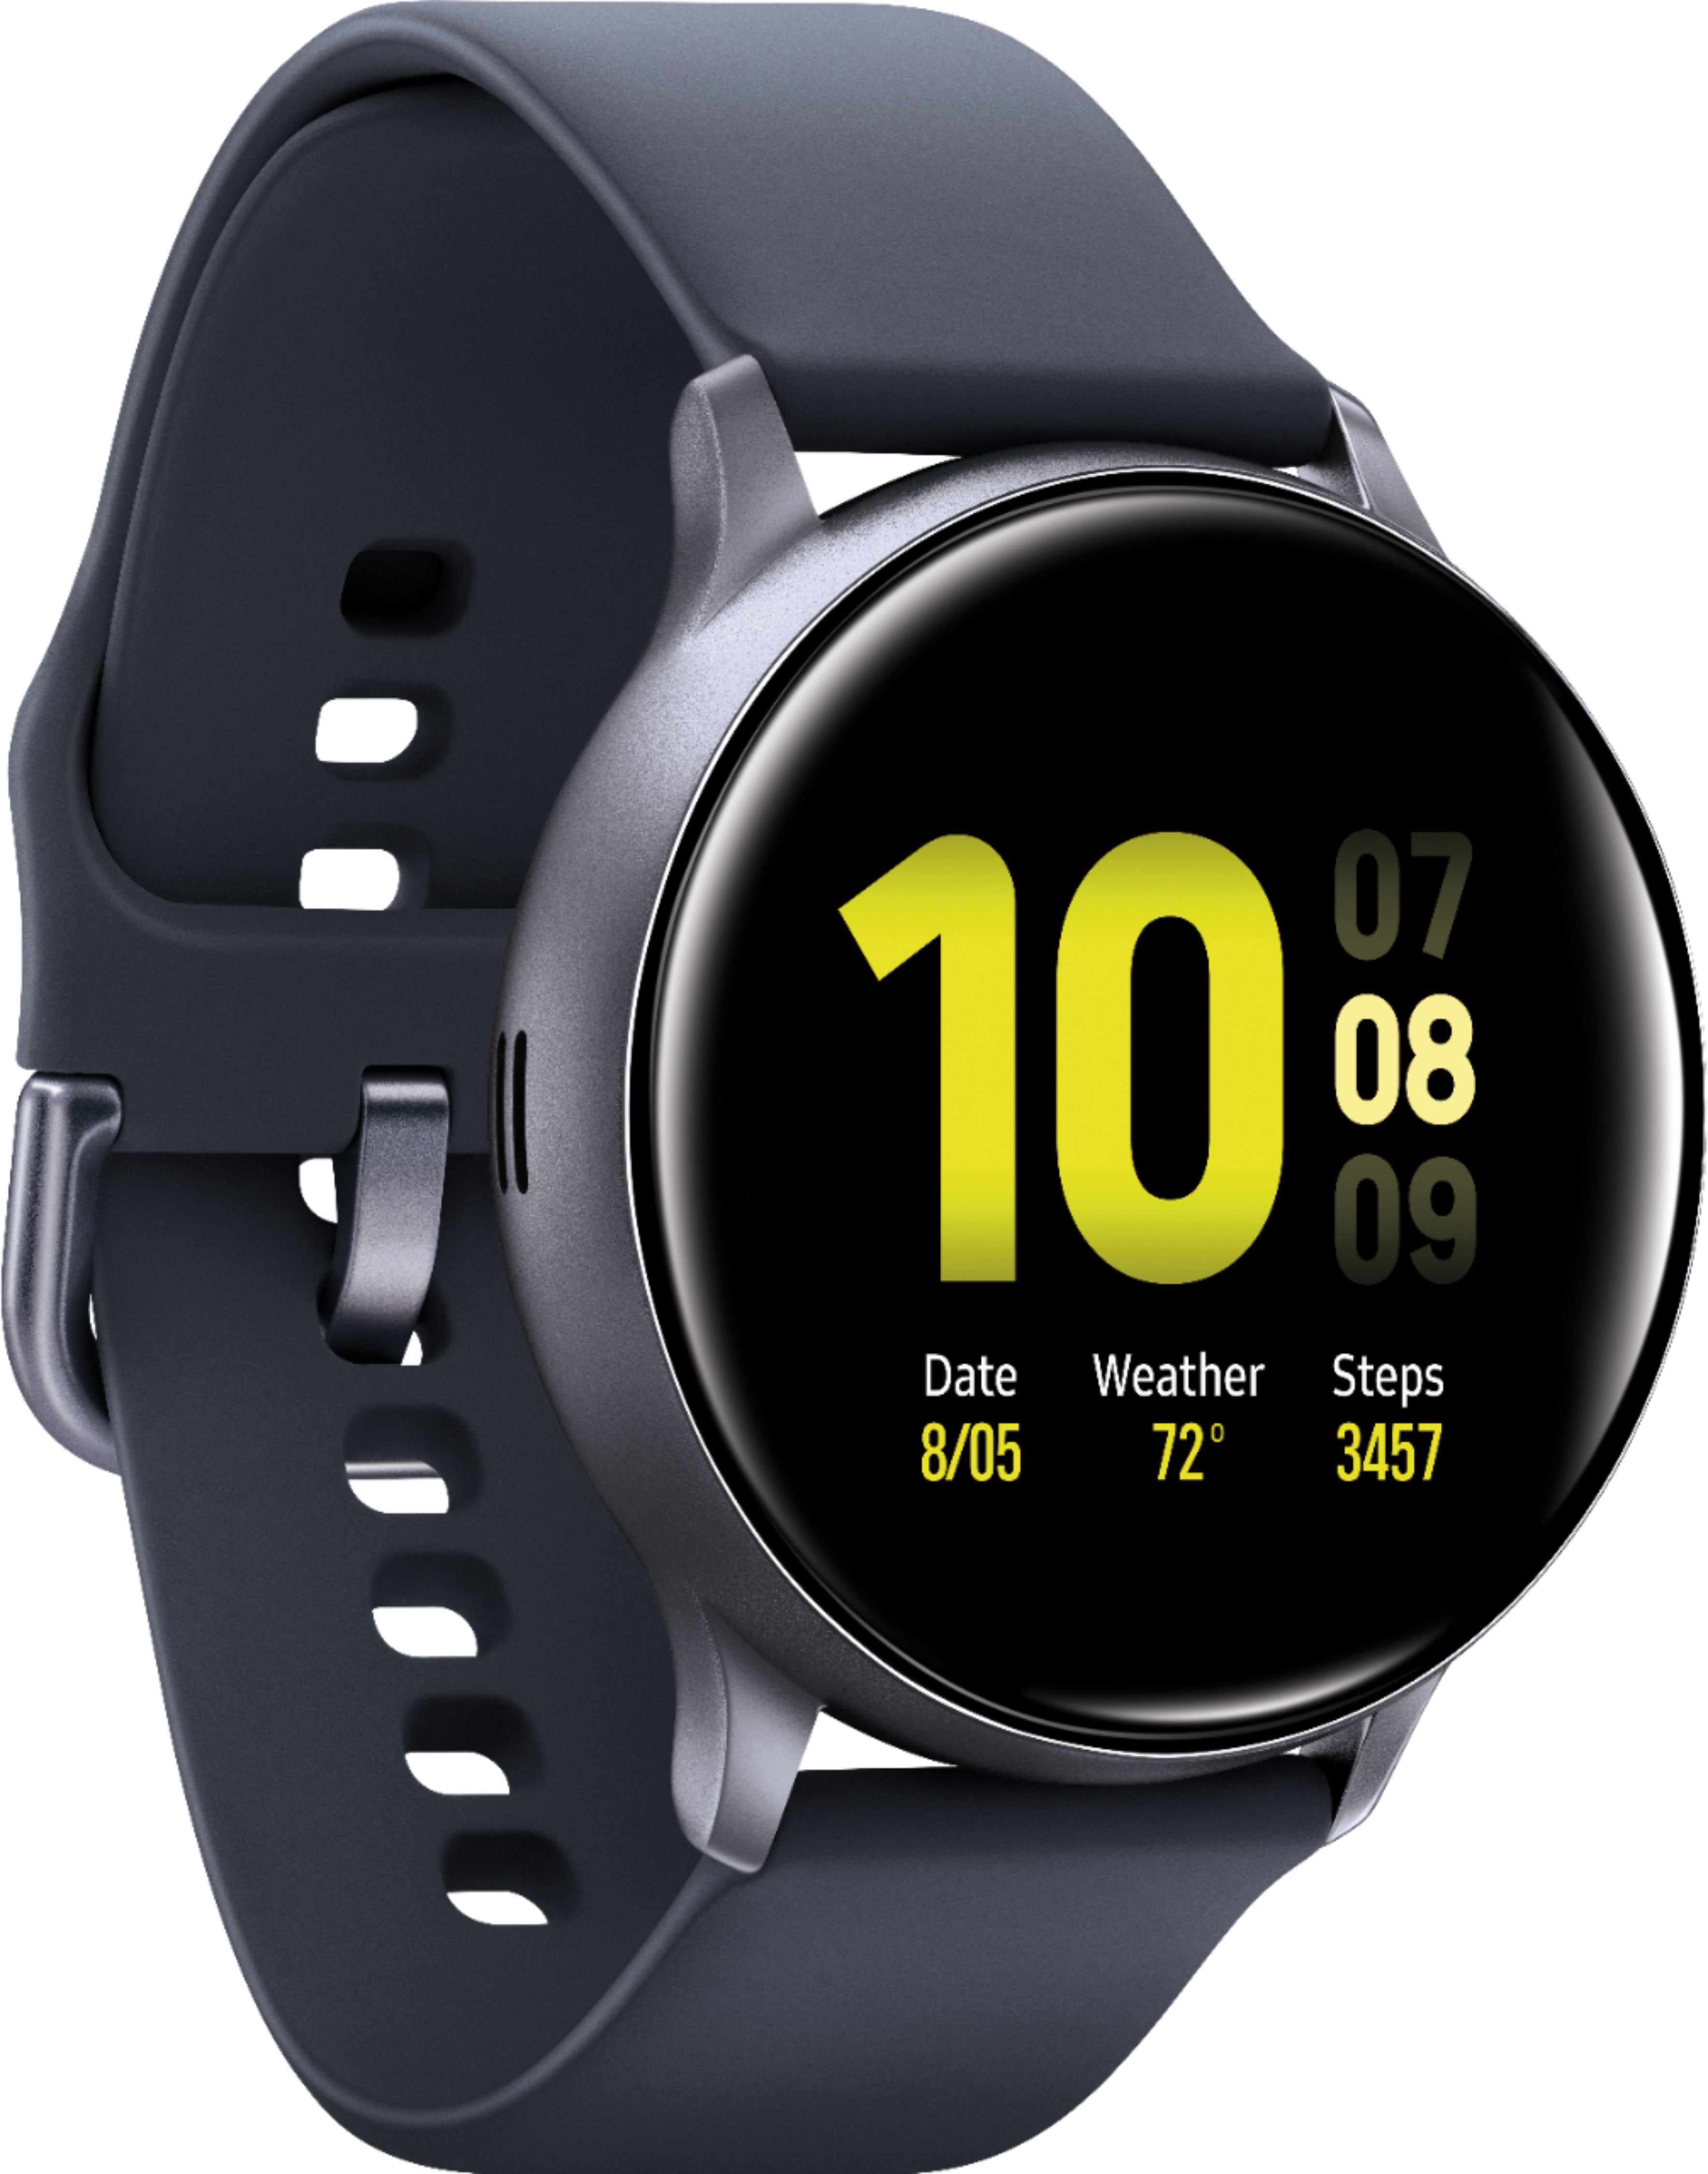 Samsung Galaxy Watch Active 2 review: A sleek smartwatch that's better  value than the Galaxy Watch 3 - CNET